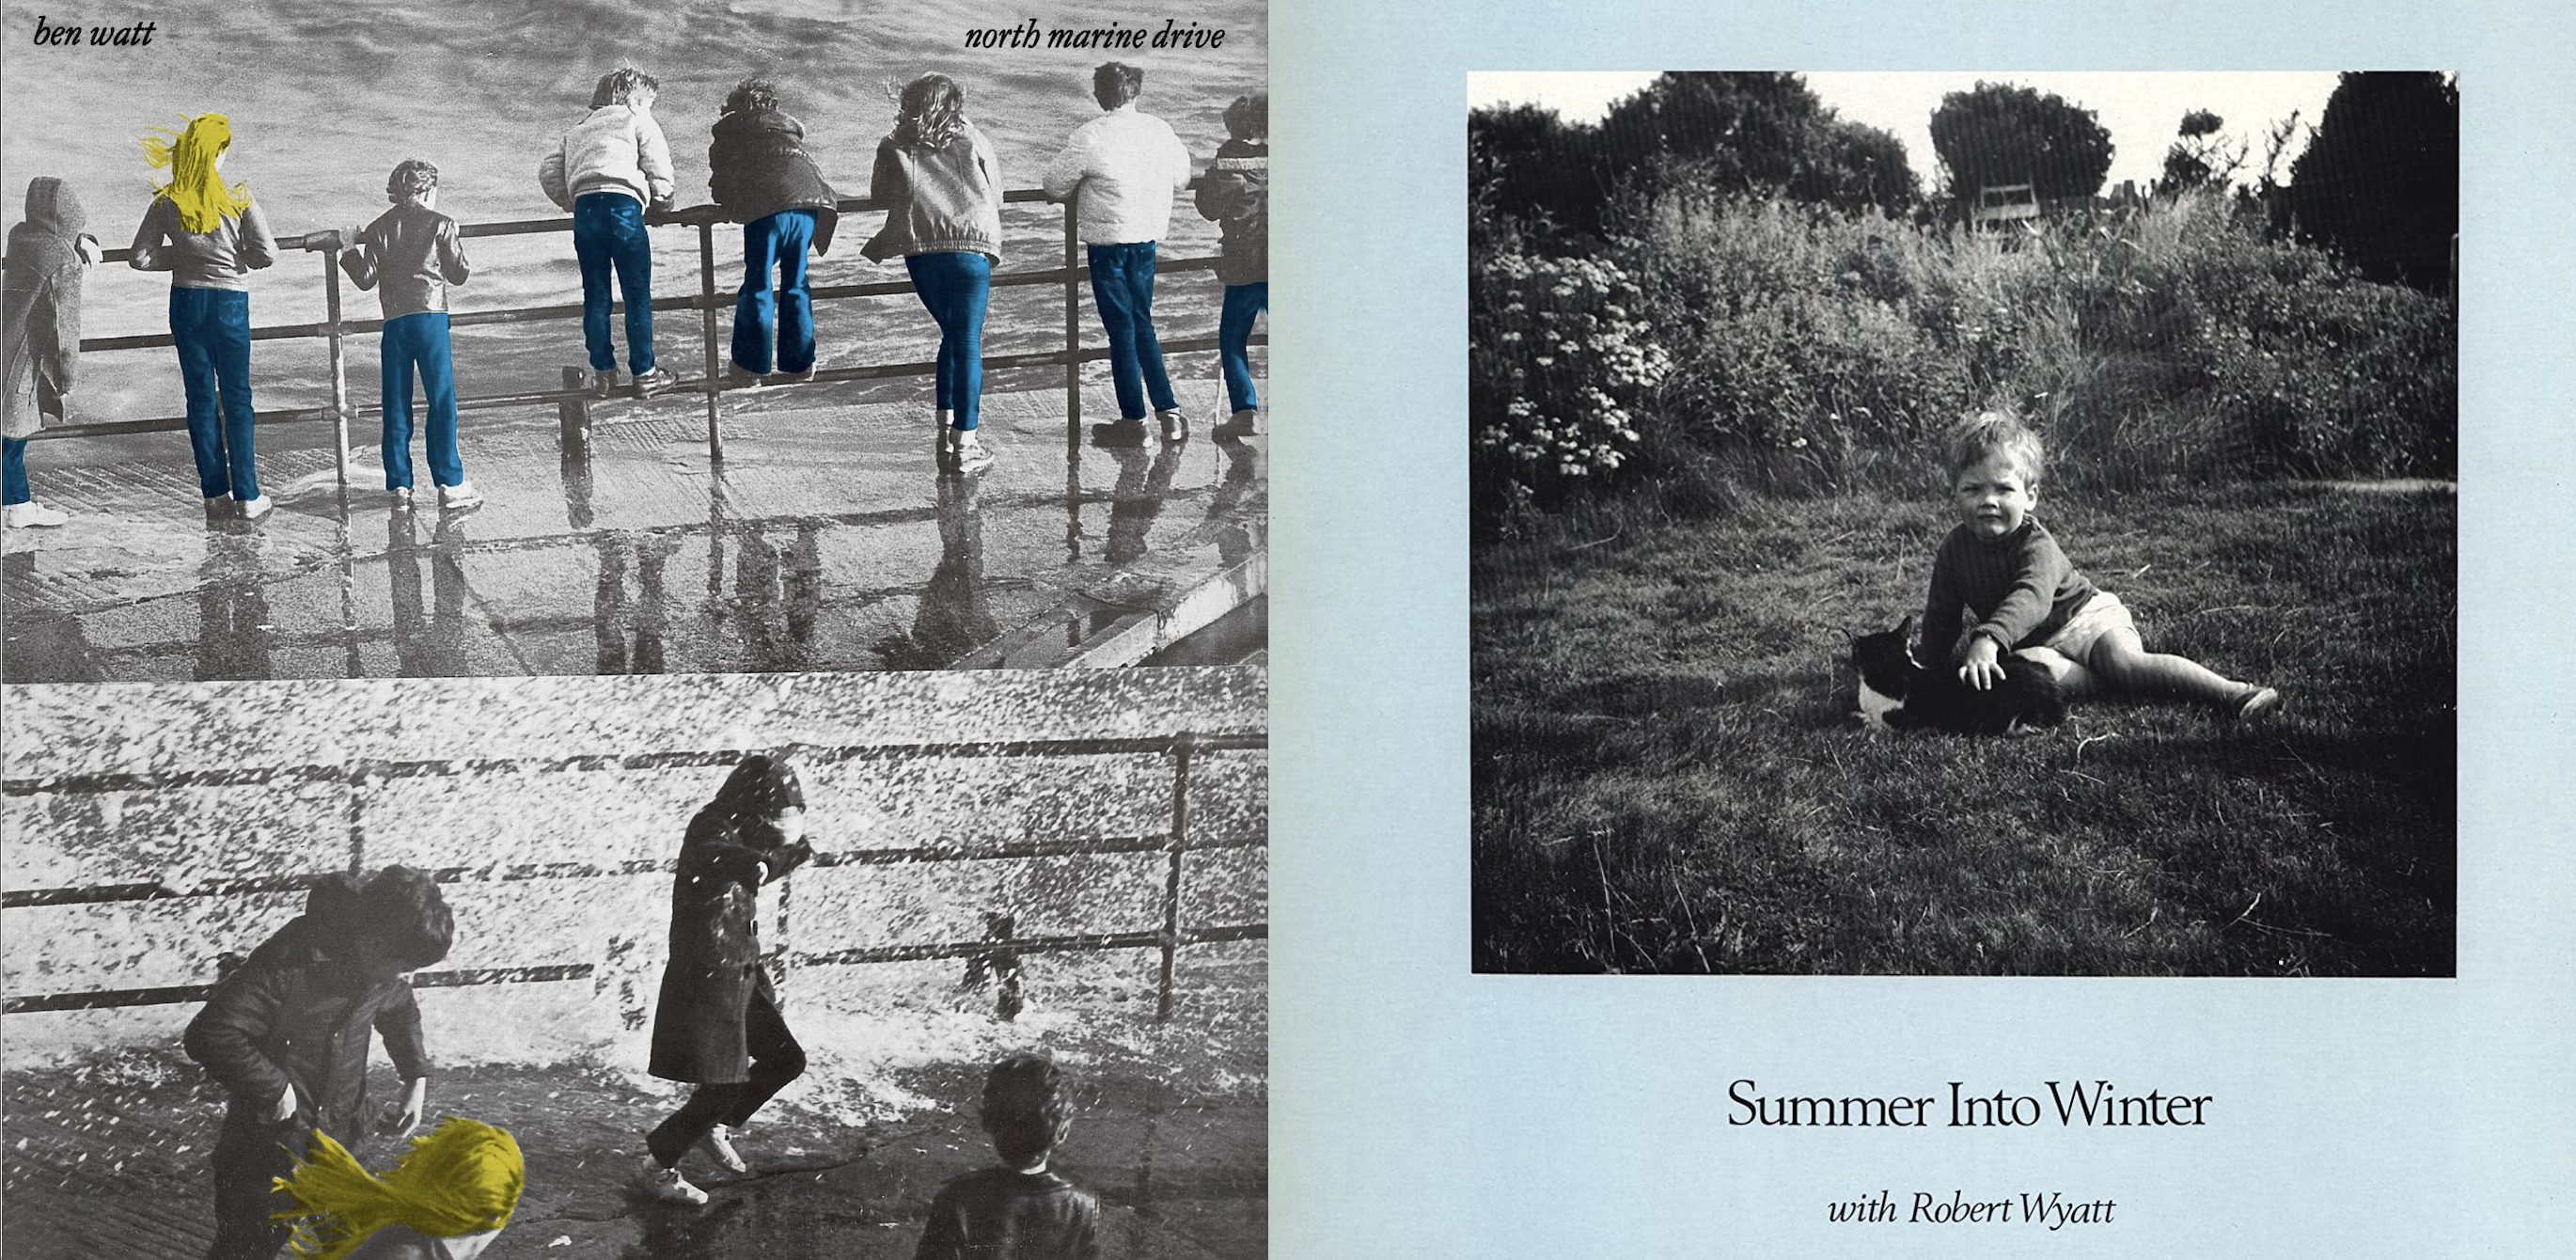 Ben Watt, Summer Into Winter (1982) & North Marine Drive (1983 